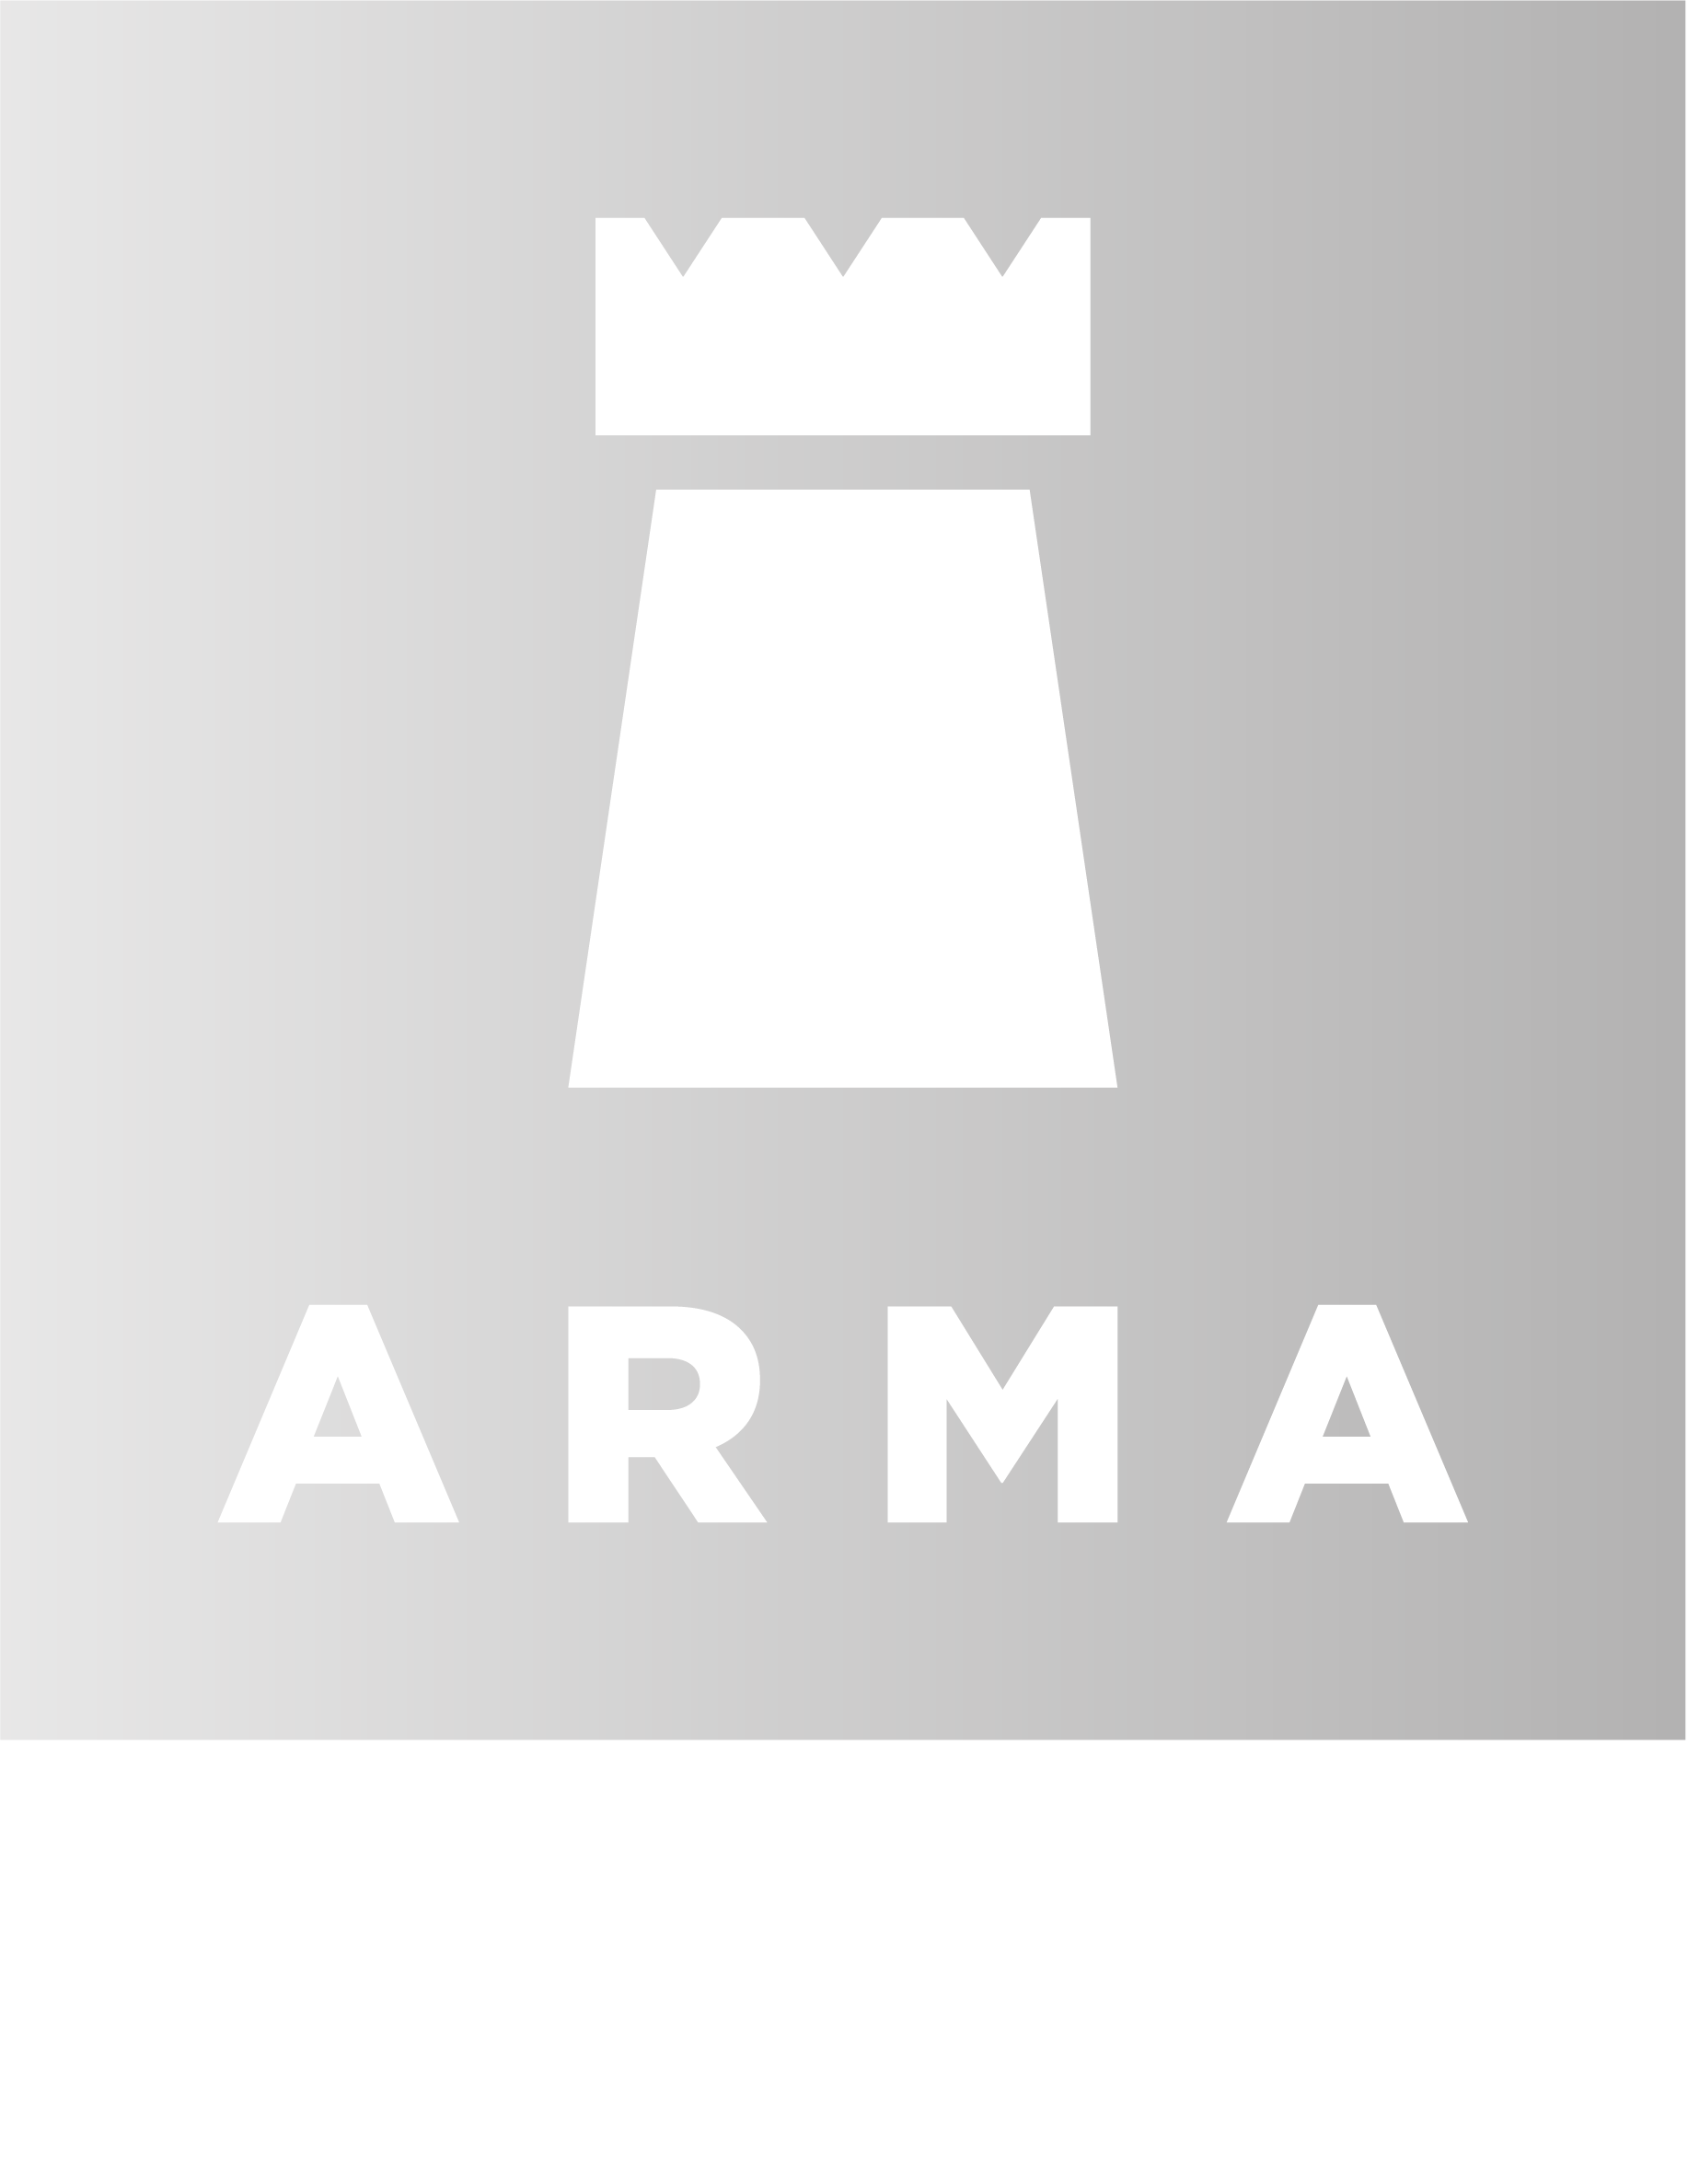 ARMA Partner Logo